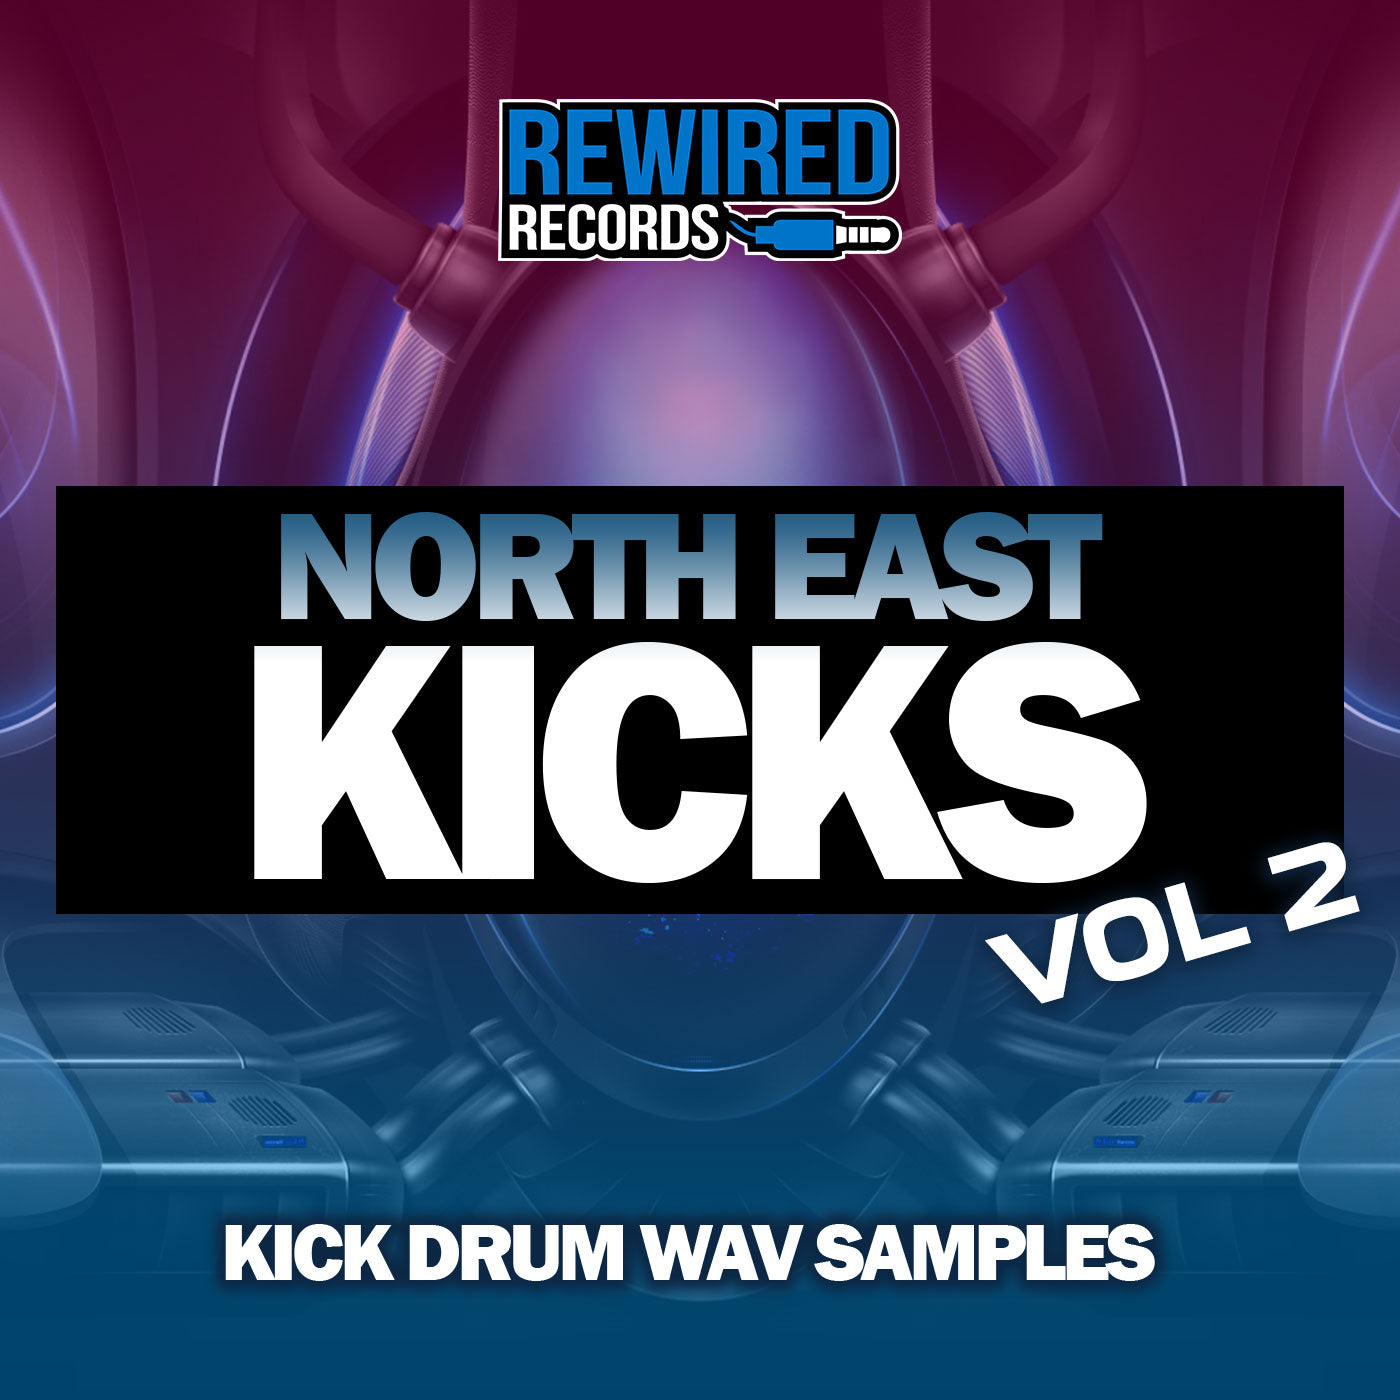 North East Kicks Vol 2 - Rewired Records